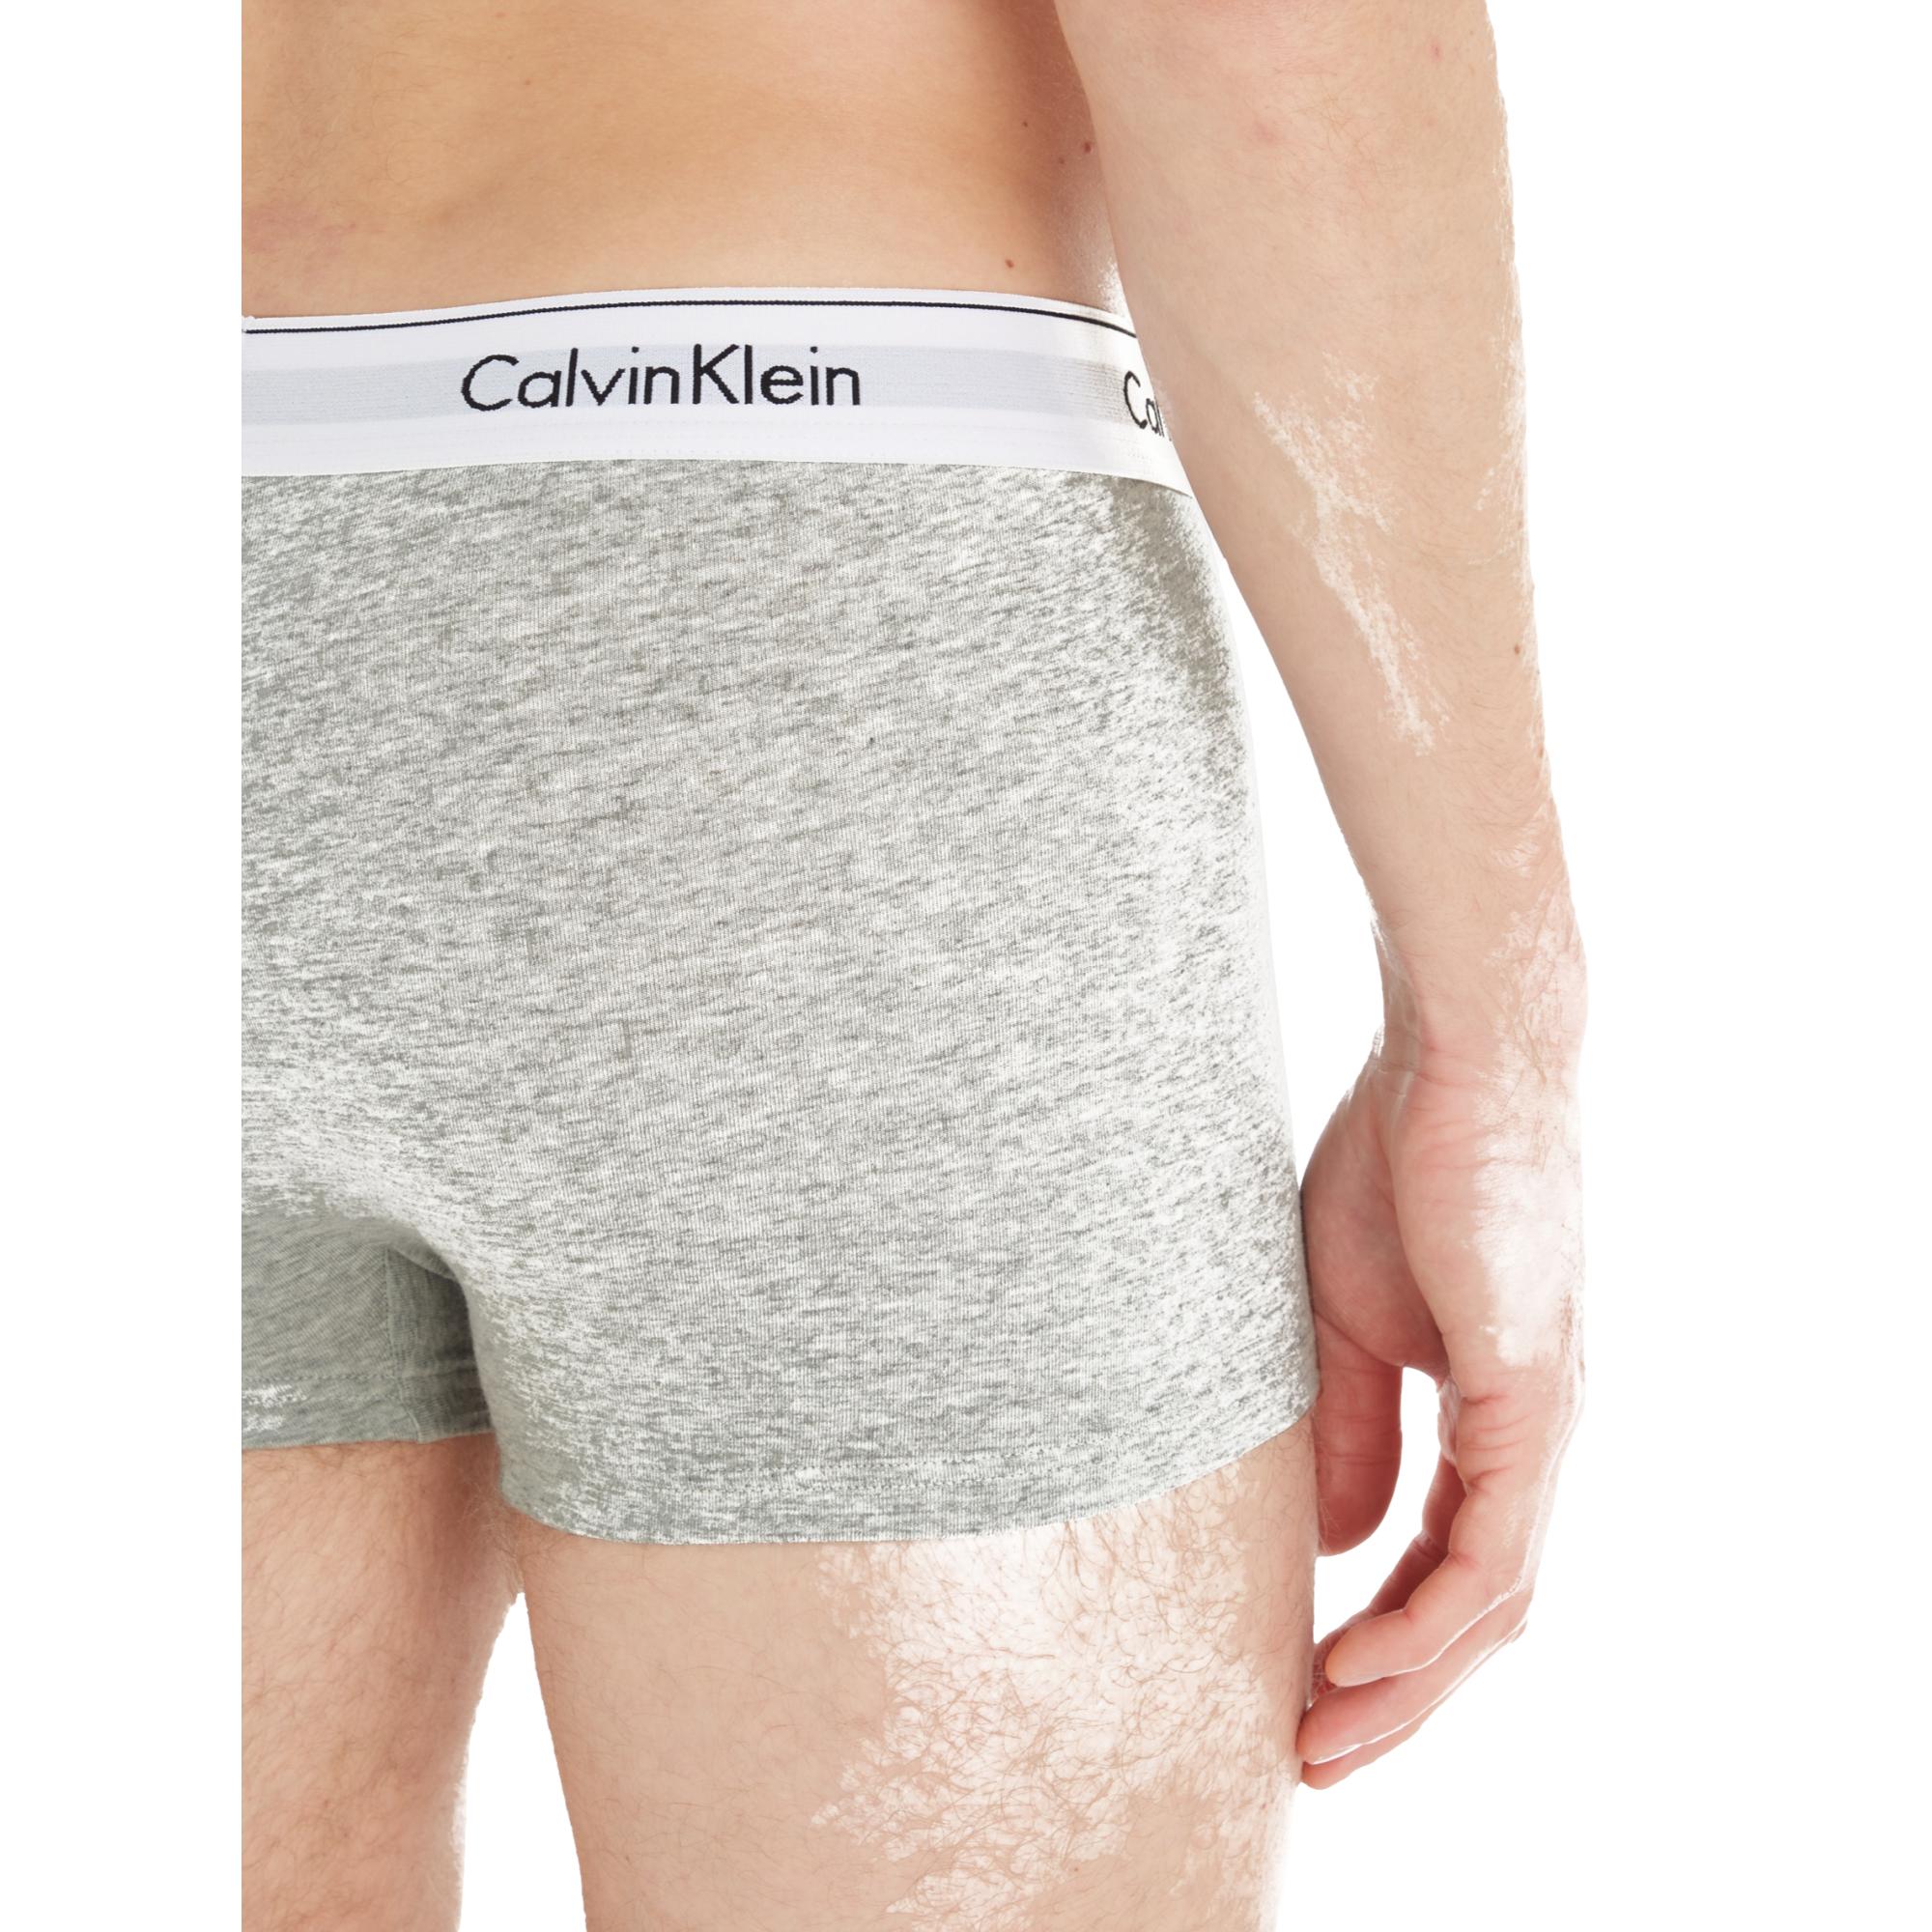 Calvin Klein Cotton Stretch Trunks 3 pack